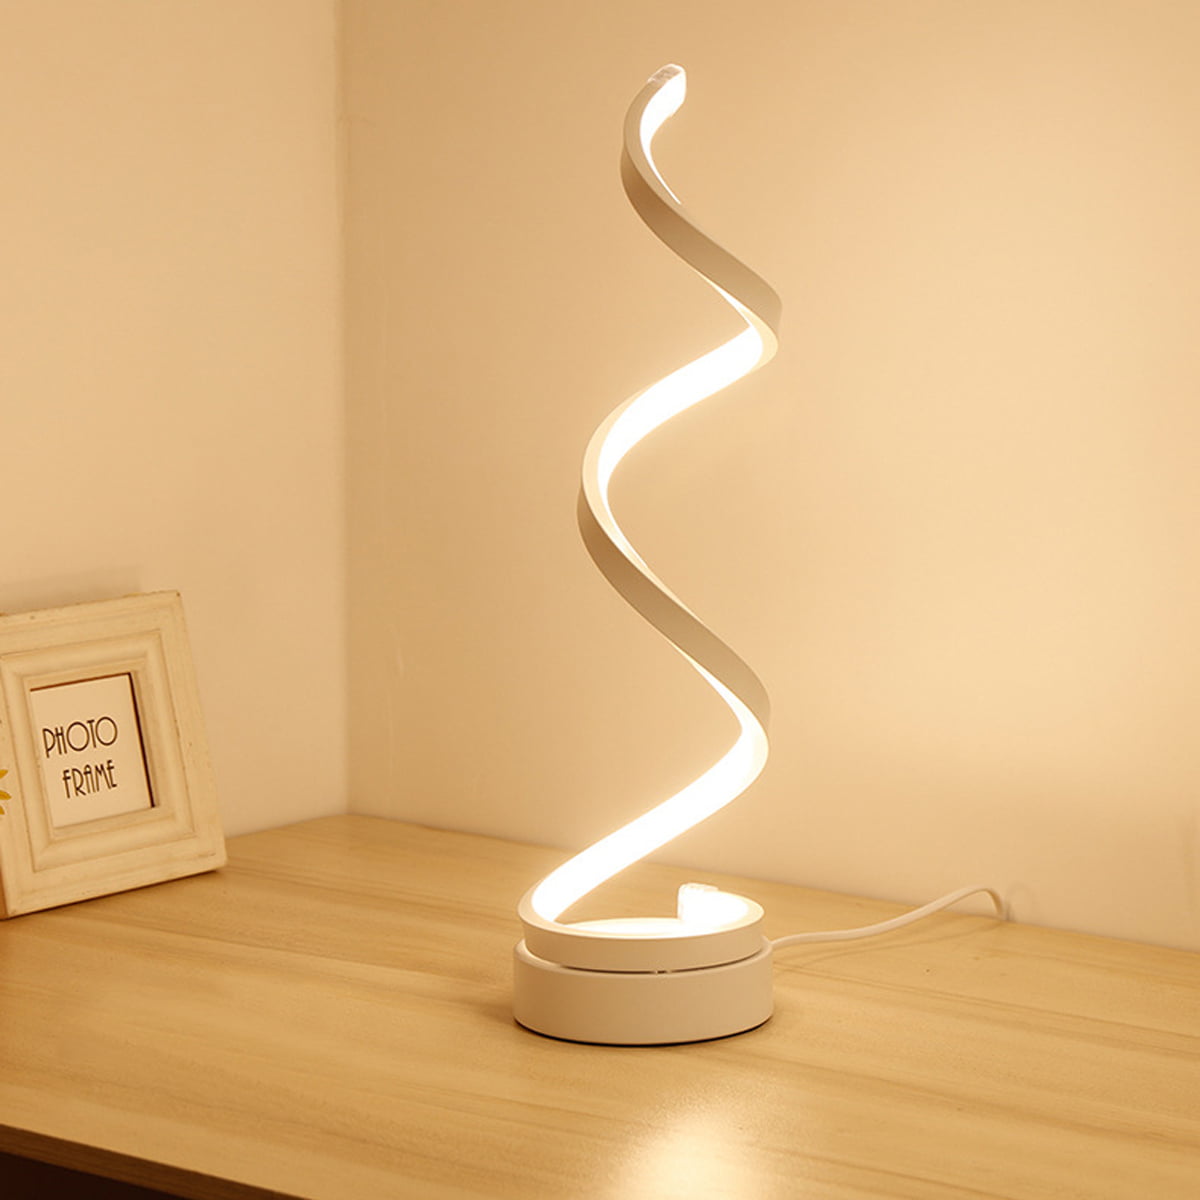 Spiral led table lamp, arc table lamp, modern minimalist lighting